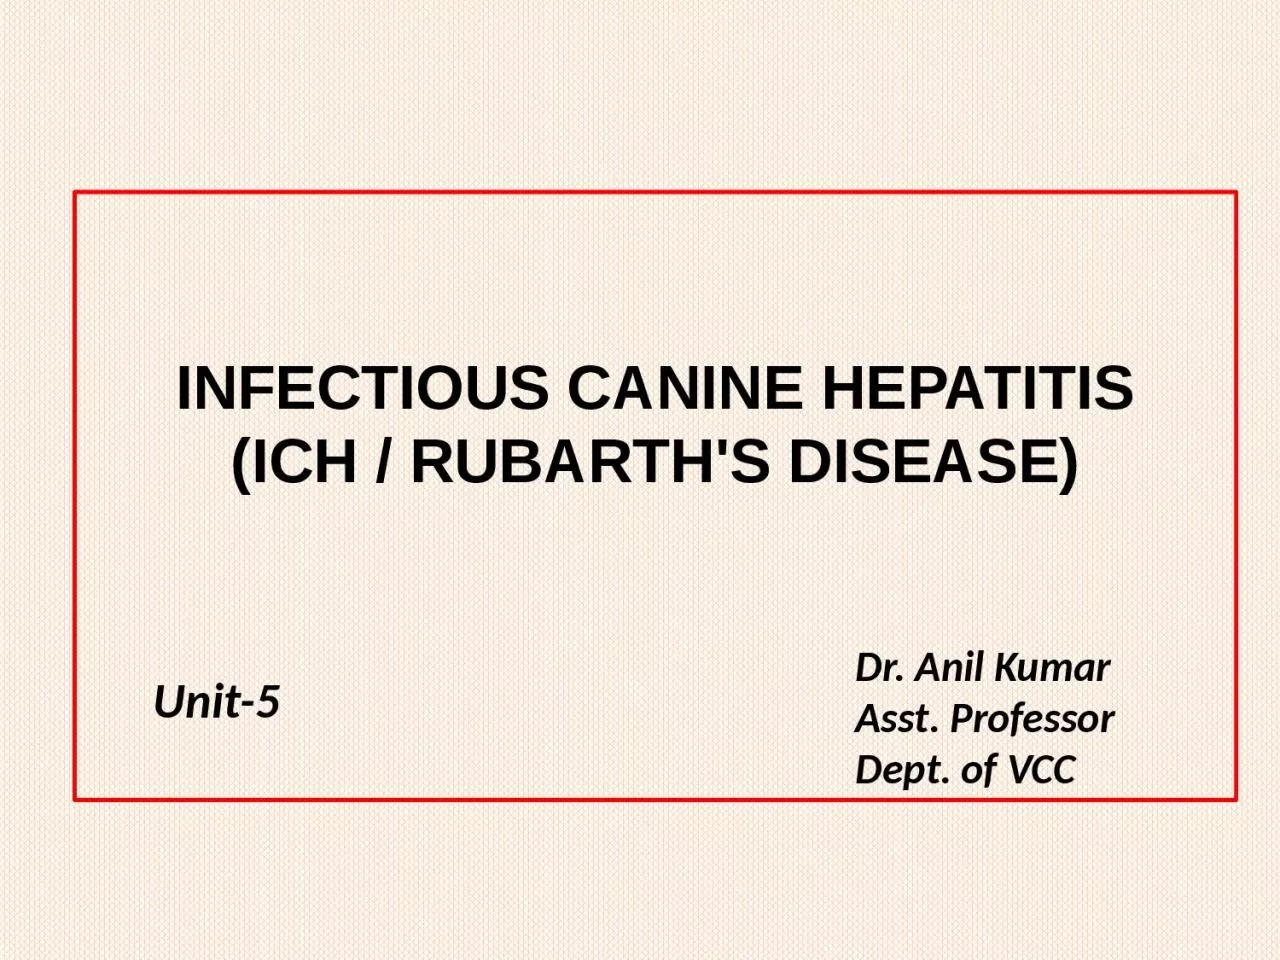 INFECTIOUS Canine hepatitis